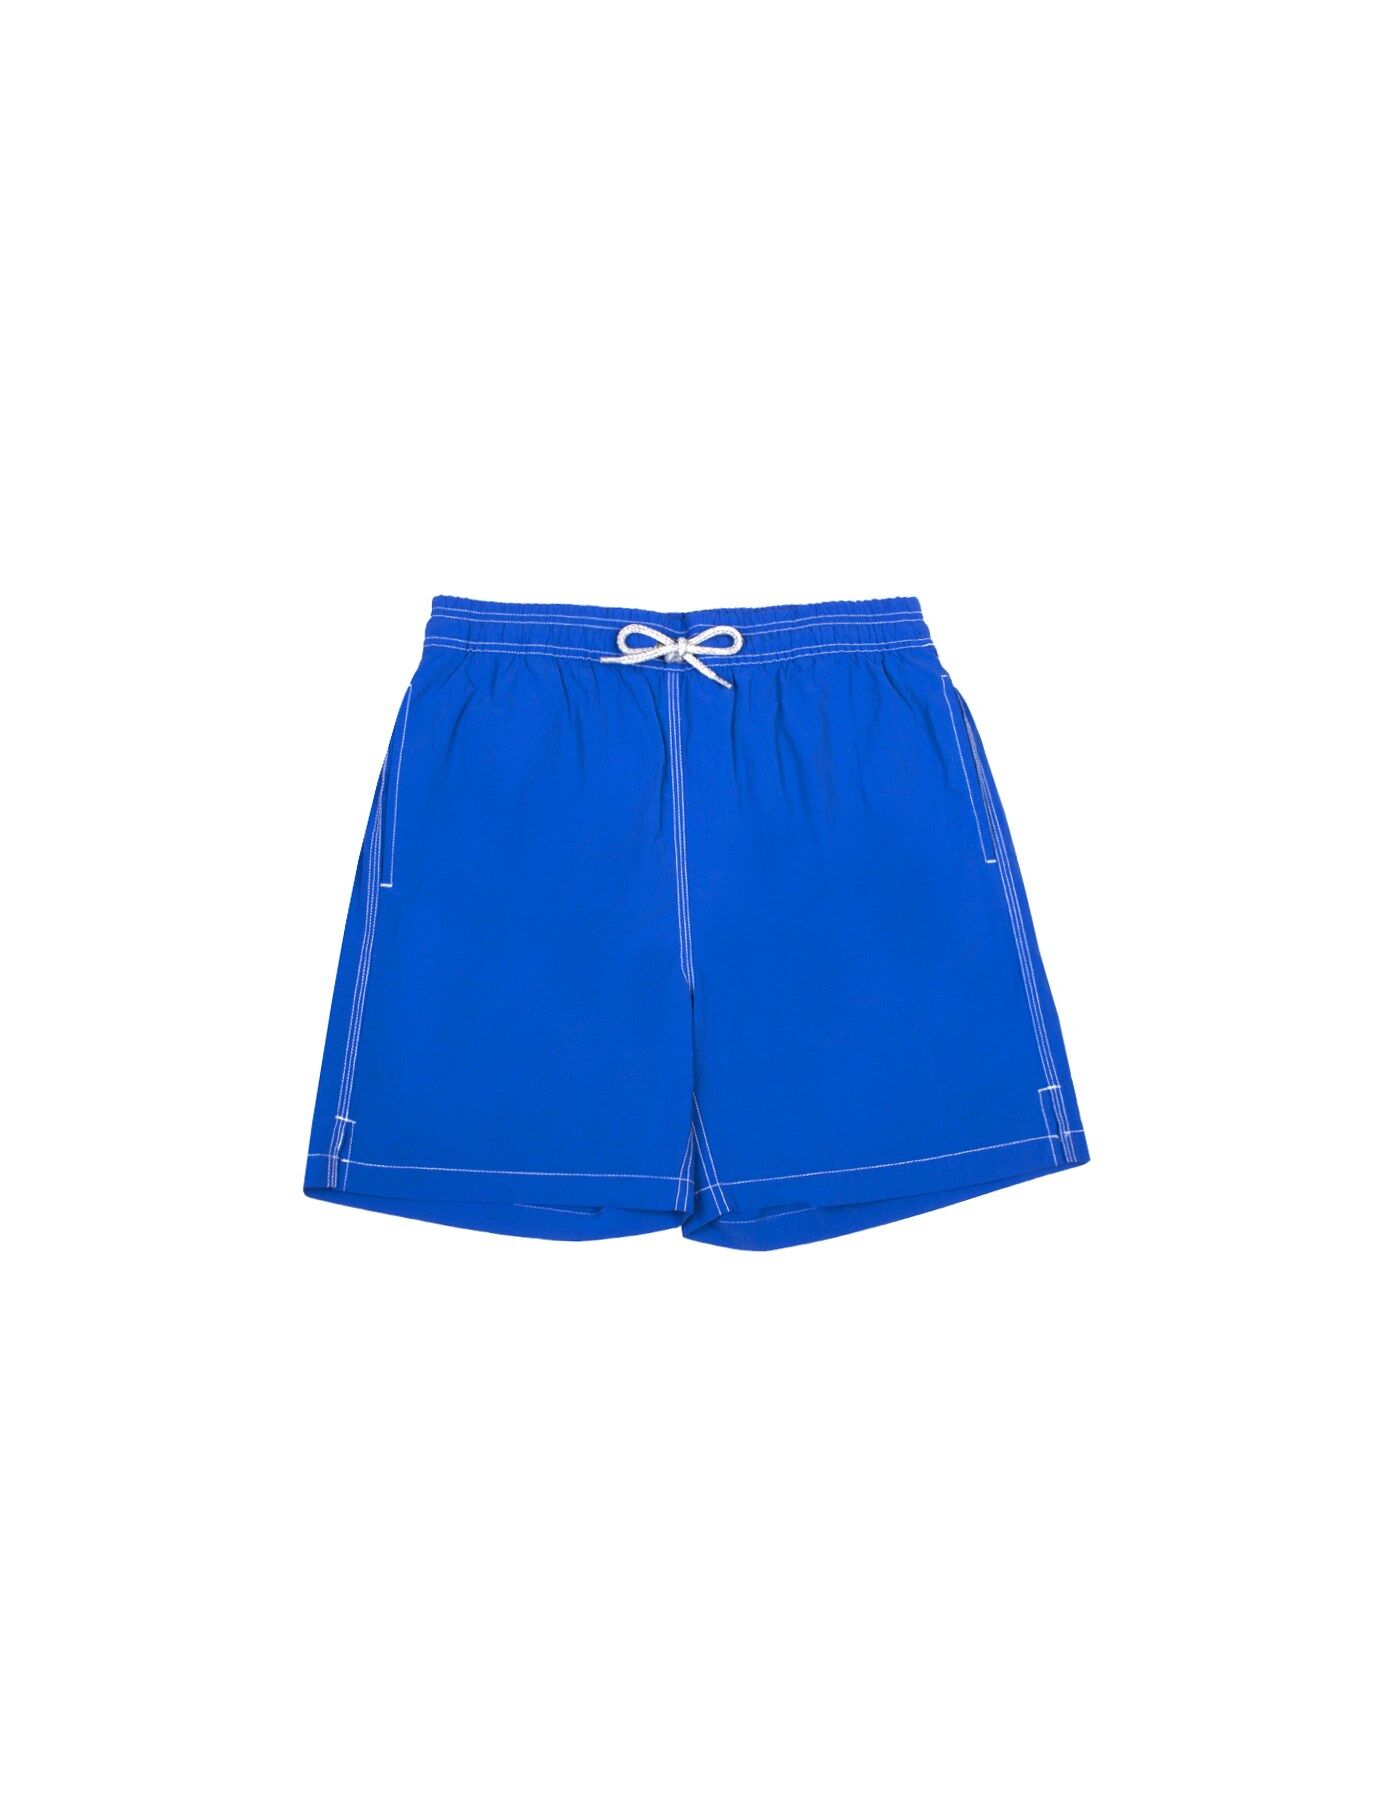 Hawes & Curtis Men's Garment Dye Swim Shorts in Blue   XL   Hawes & Curtis